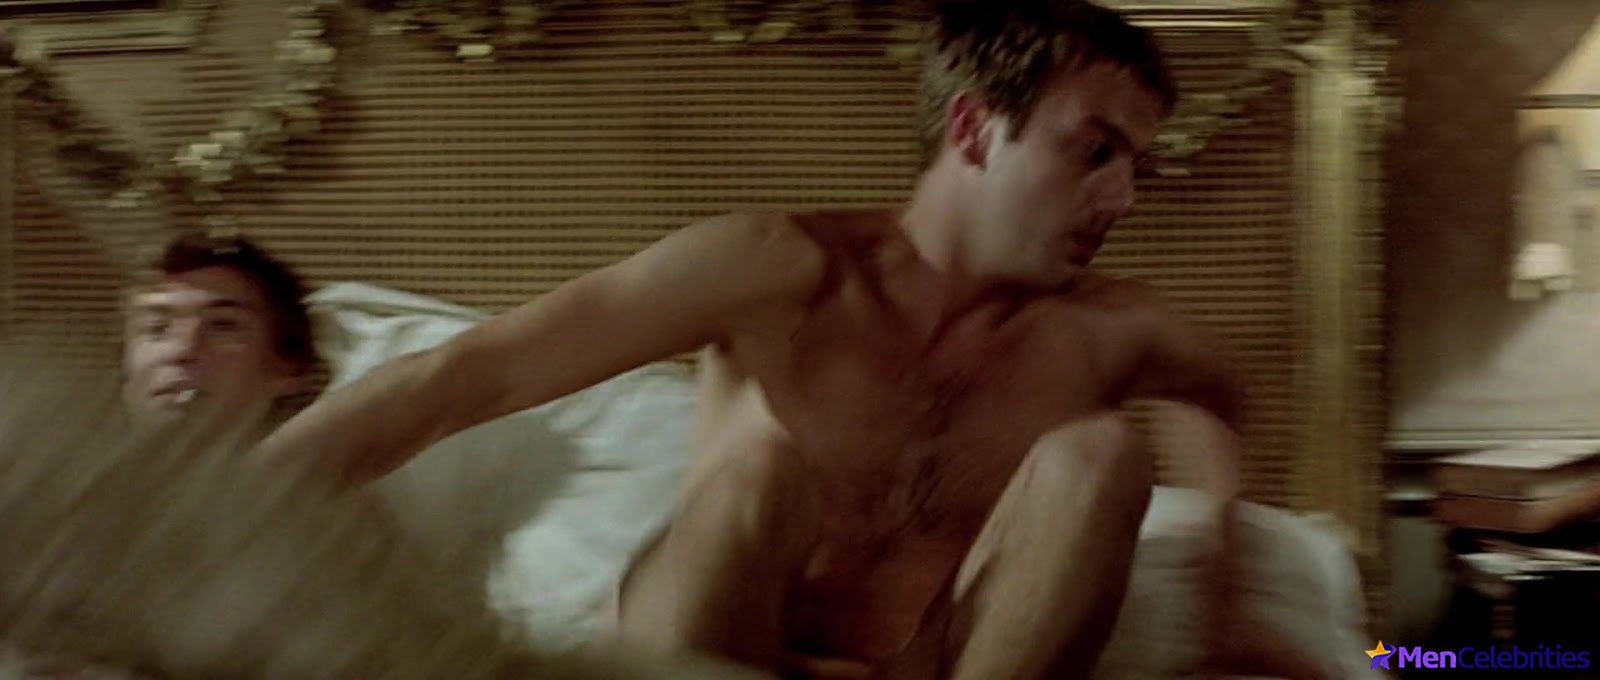 David Jude Heyworth Law naked and gay sex scenes.